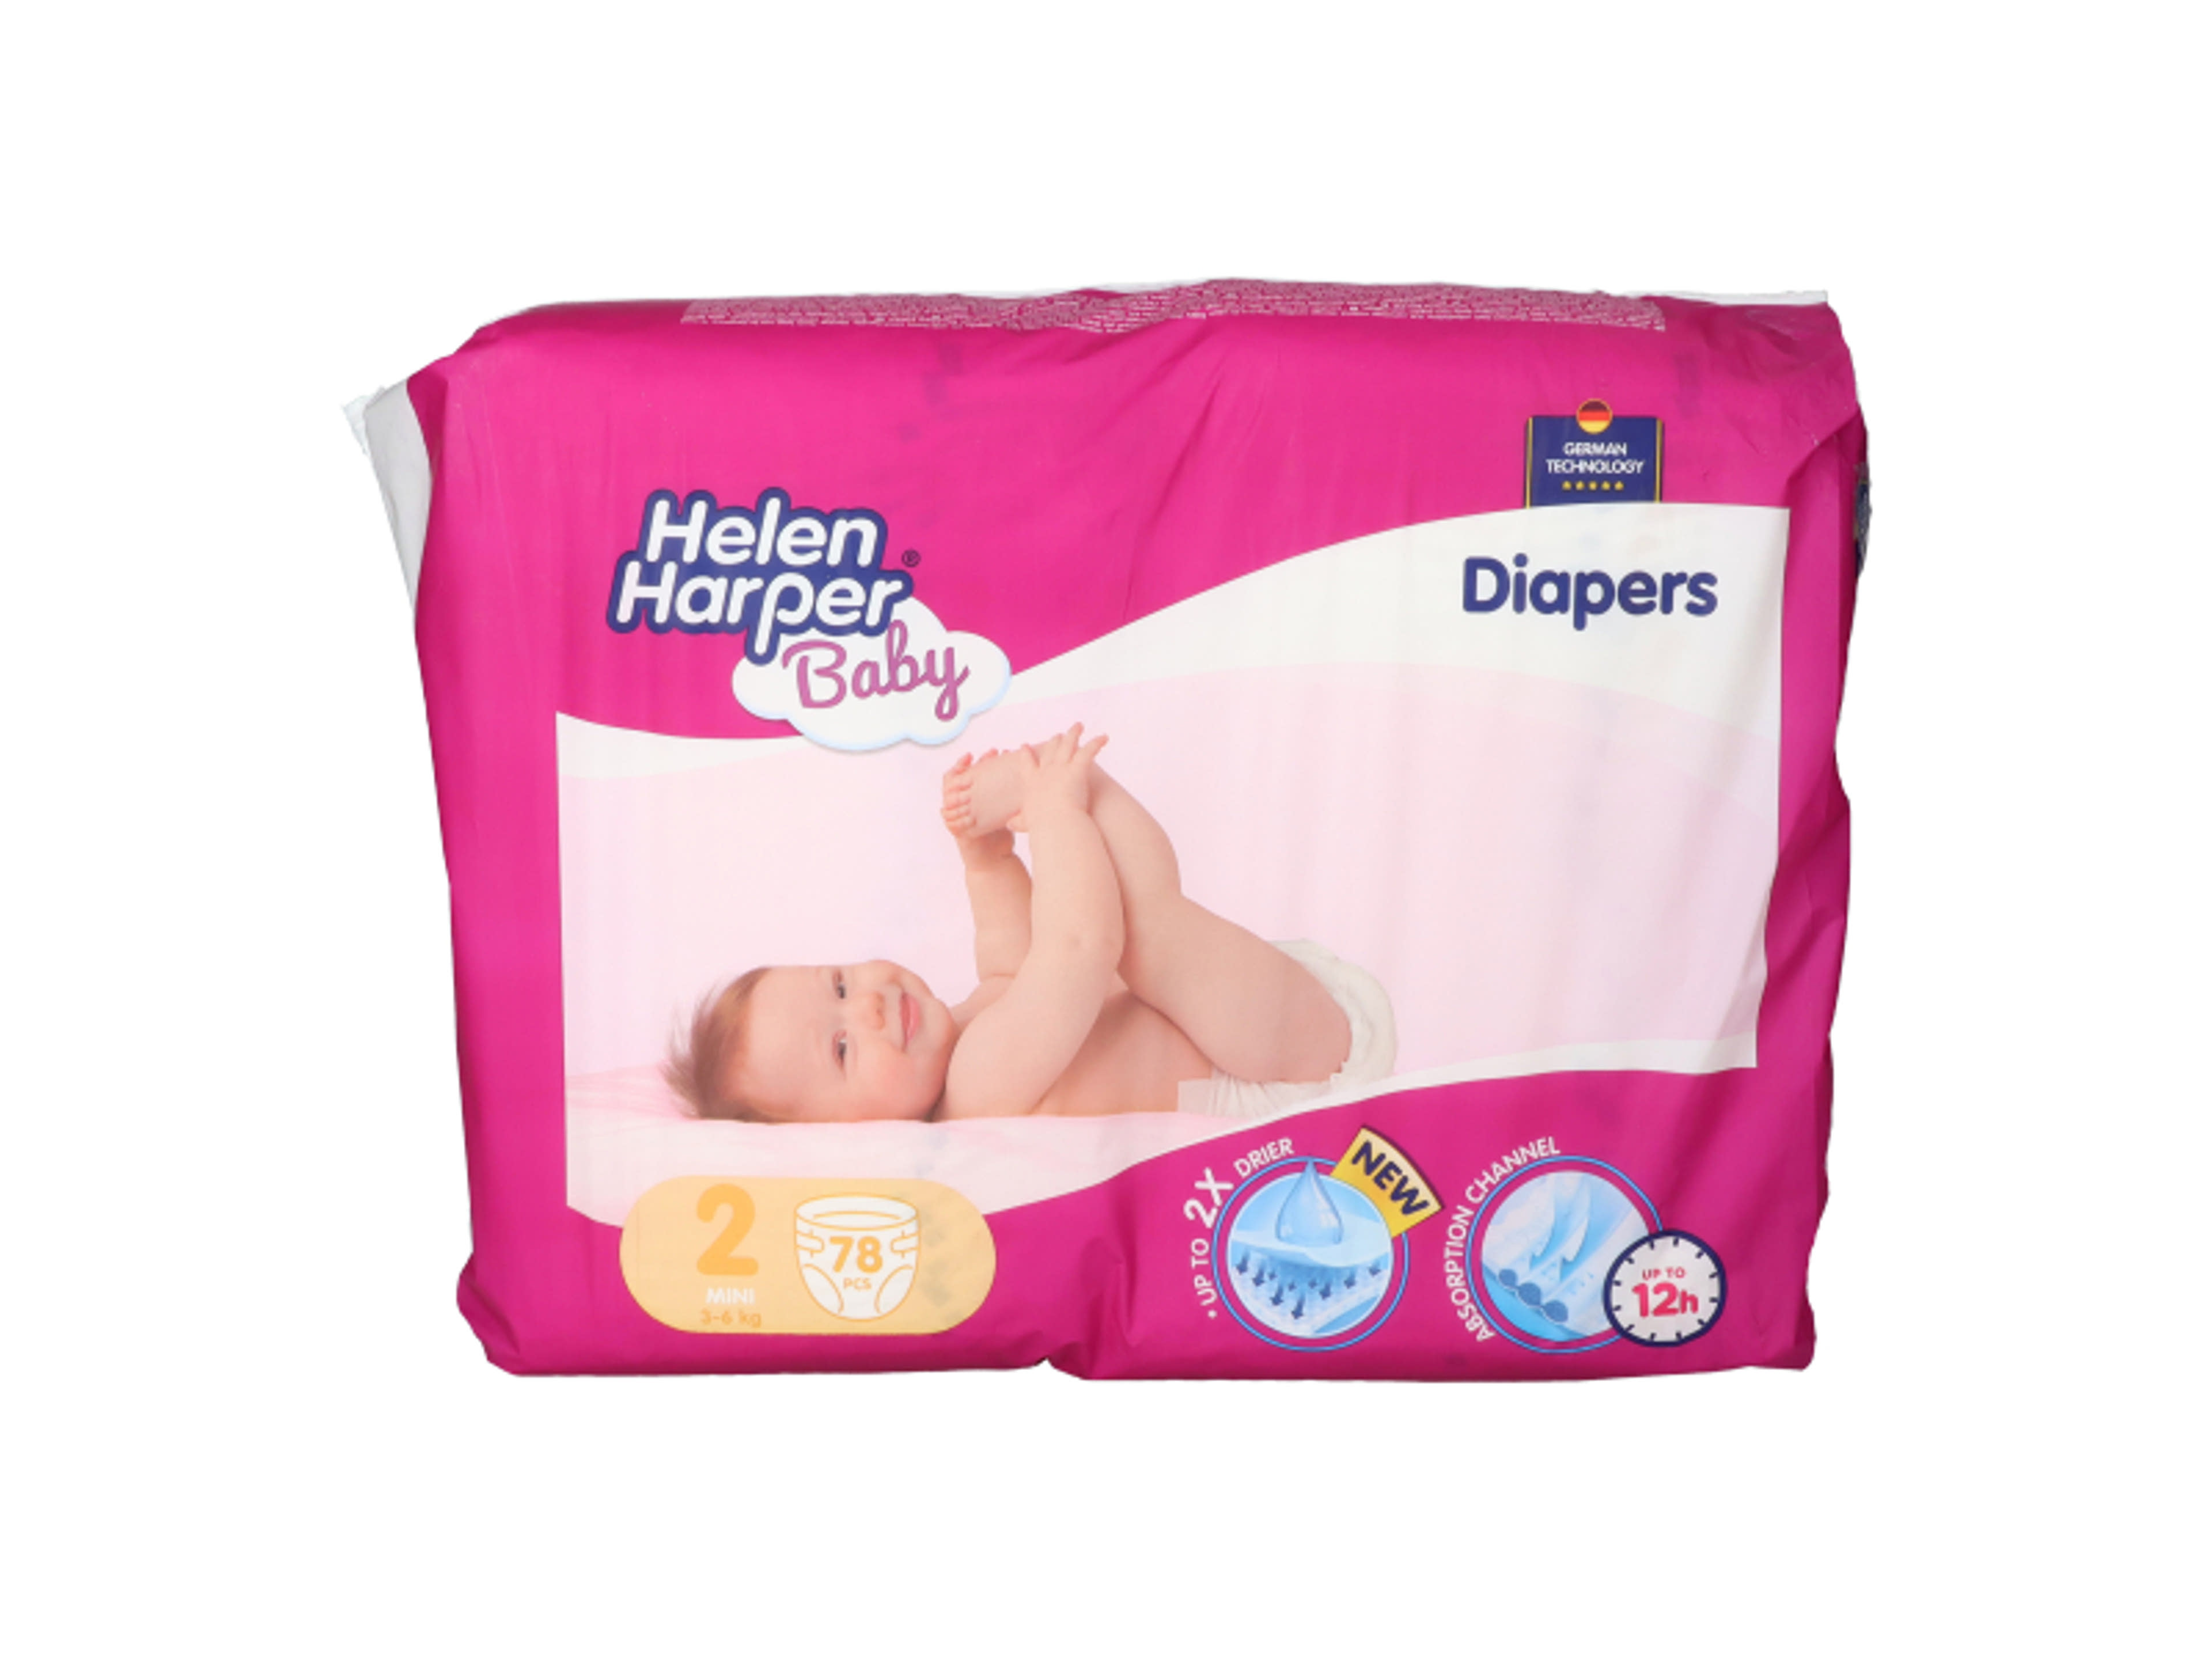 Helen Harper baby pelenka 2-es 3-6kg - 78 db